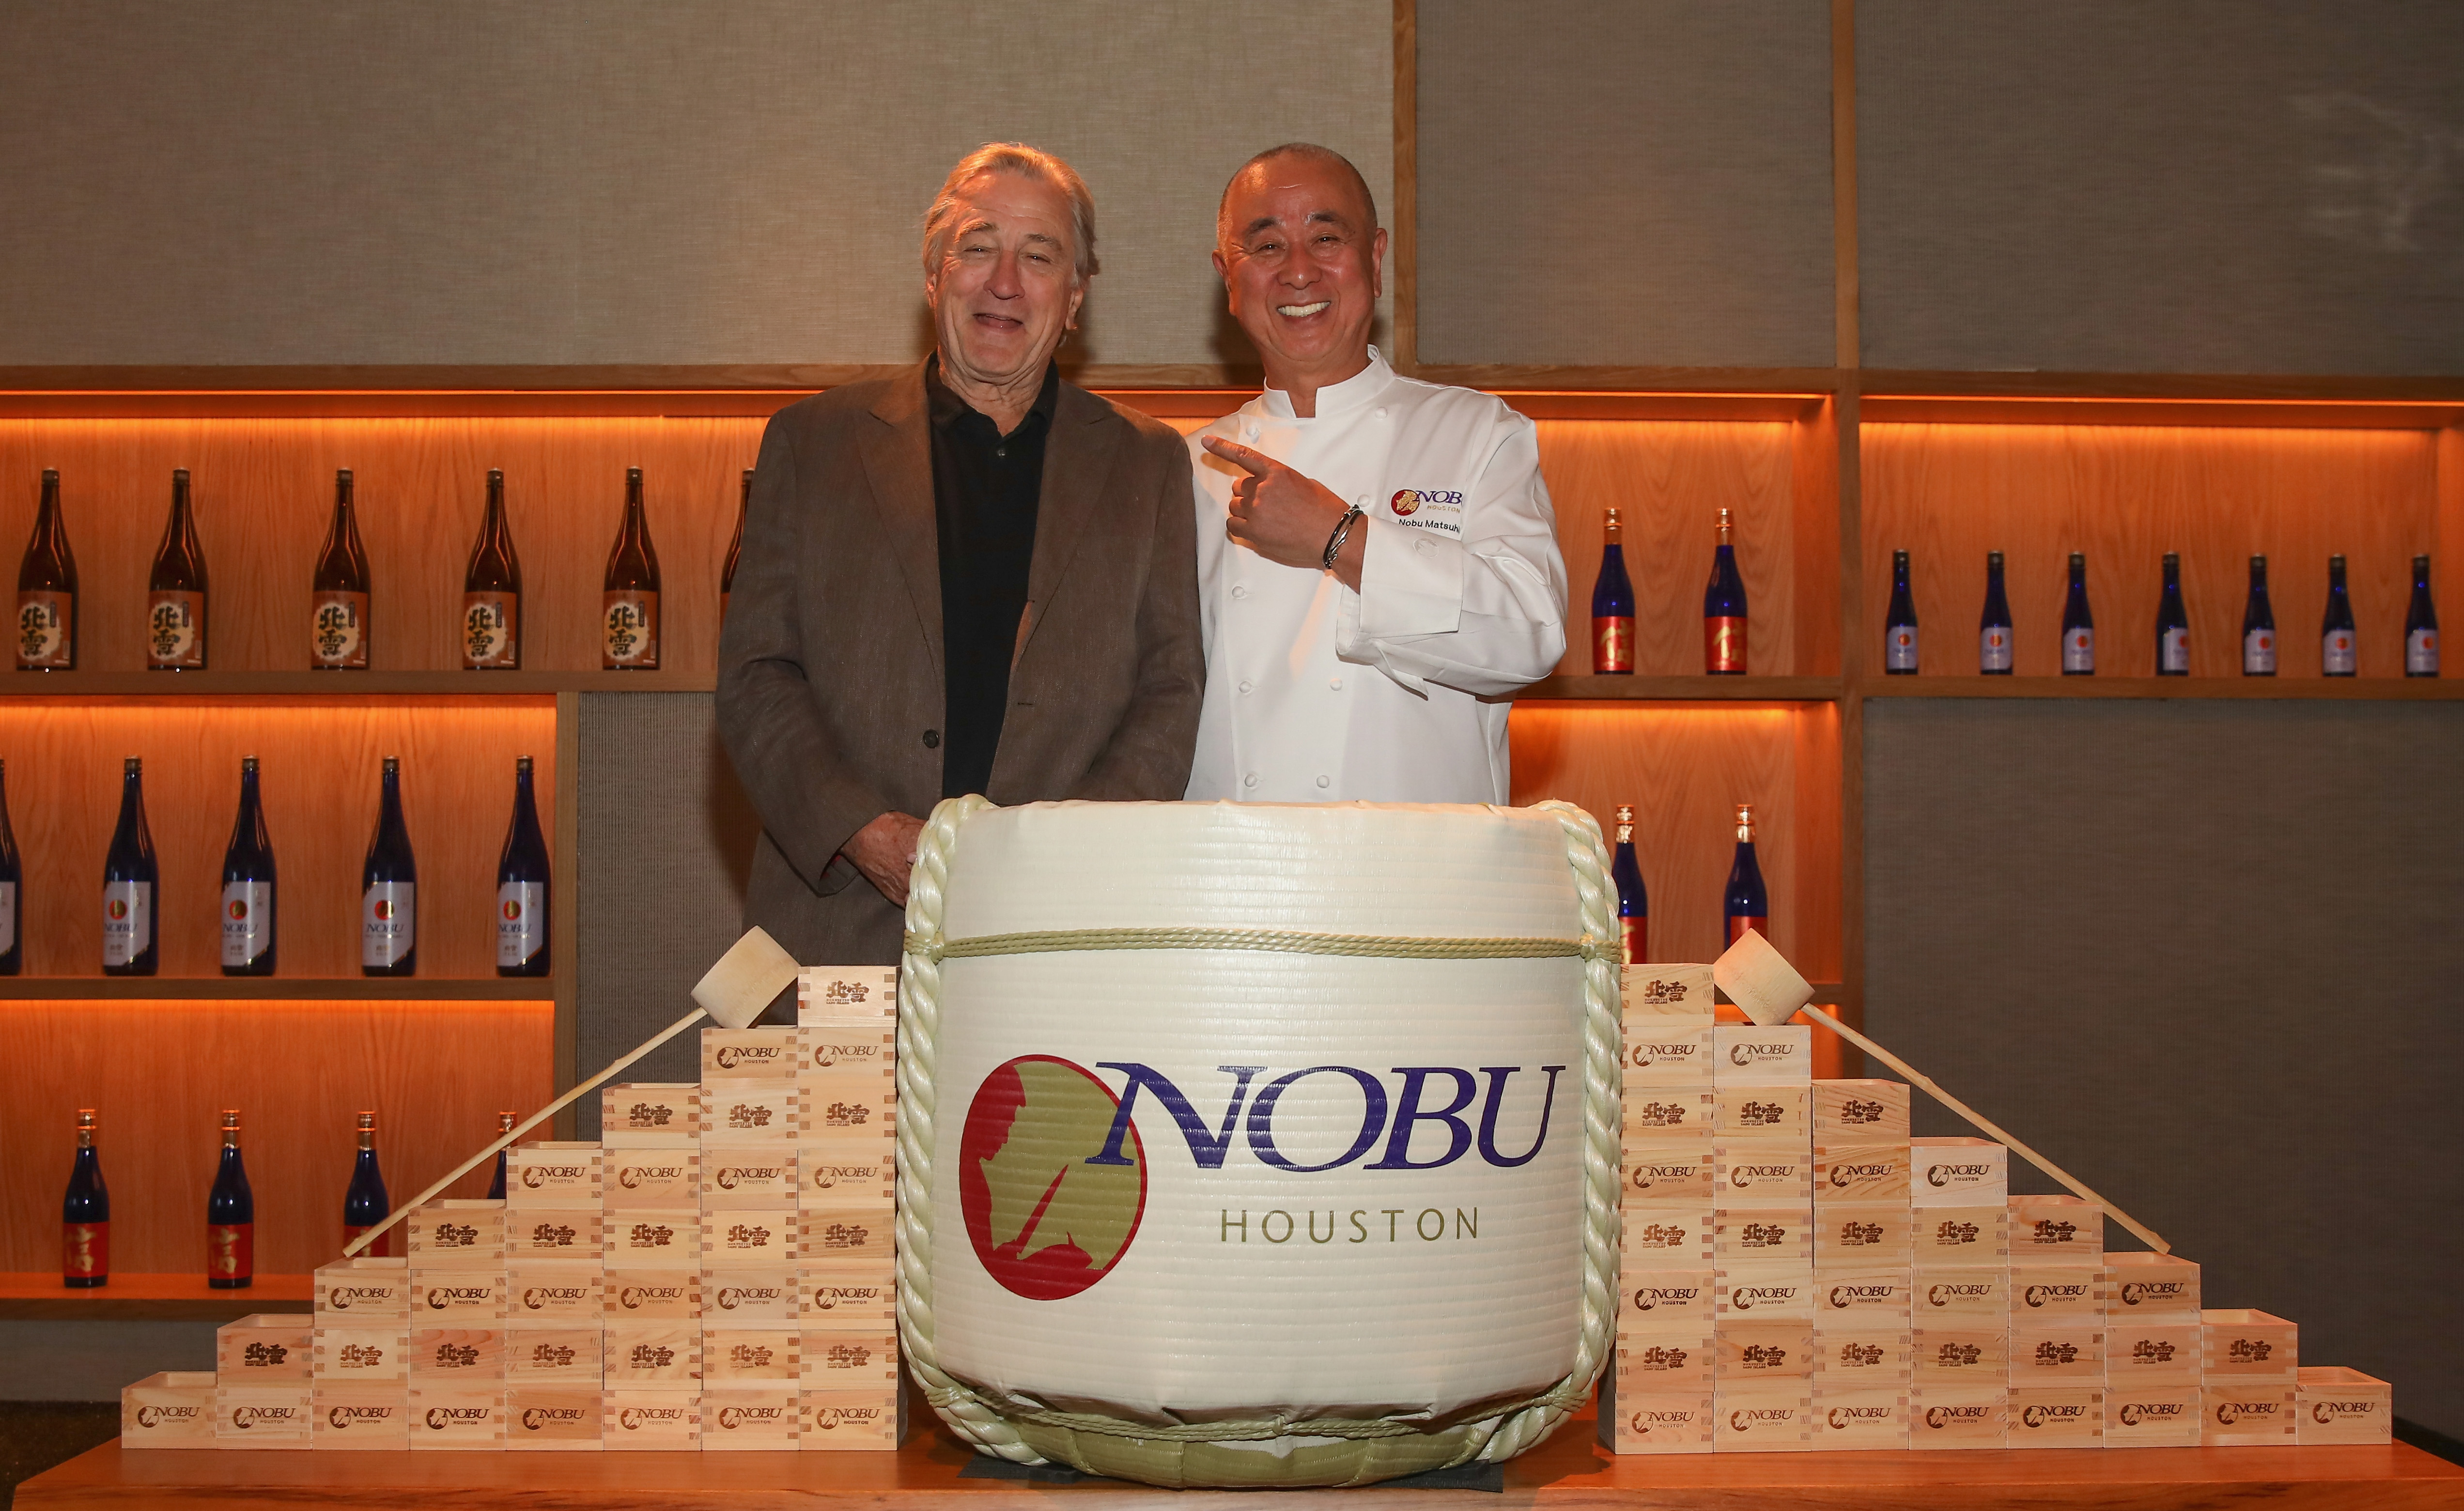 Robert De Niro and Chef Nobu Matsuhisa at the Nobu Houston Sake Ceremony on October 18, 2018 in Houston, Texas | Source: Getty Images